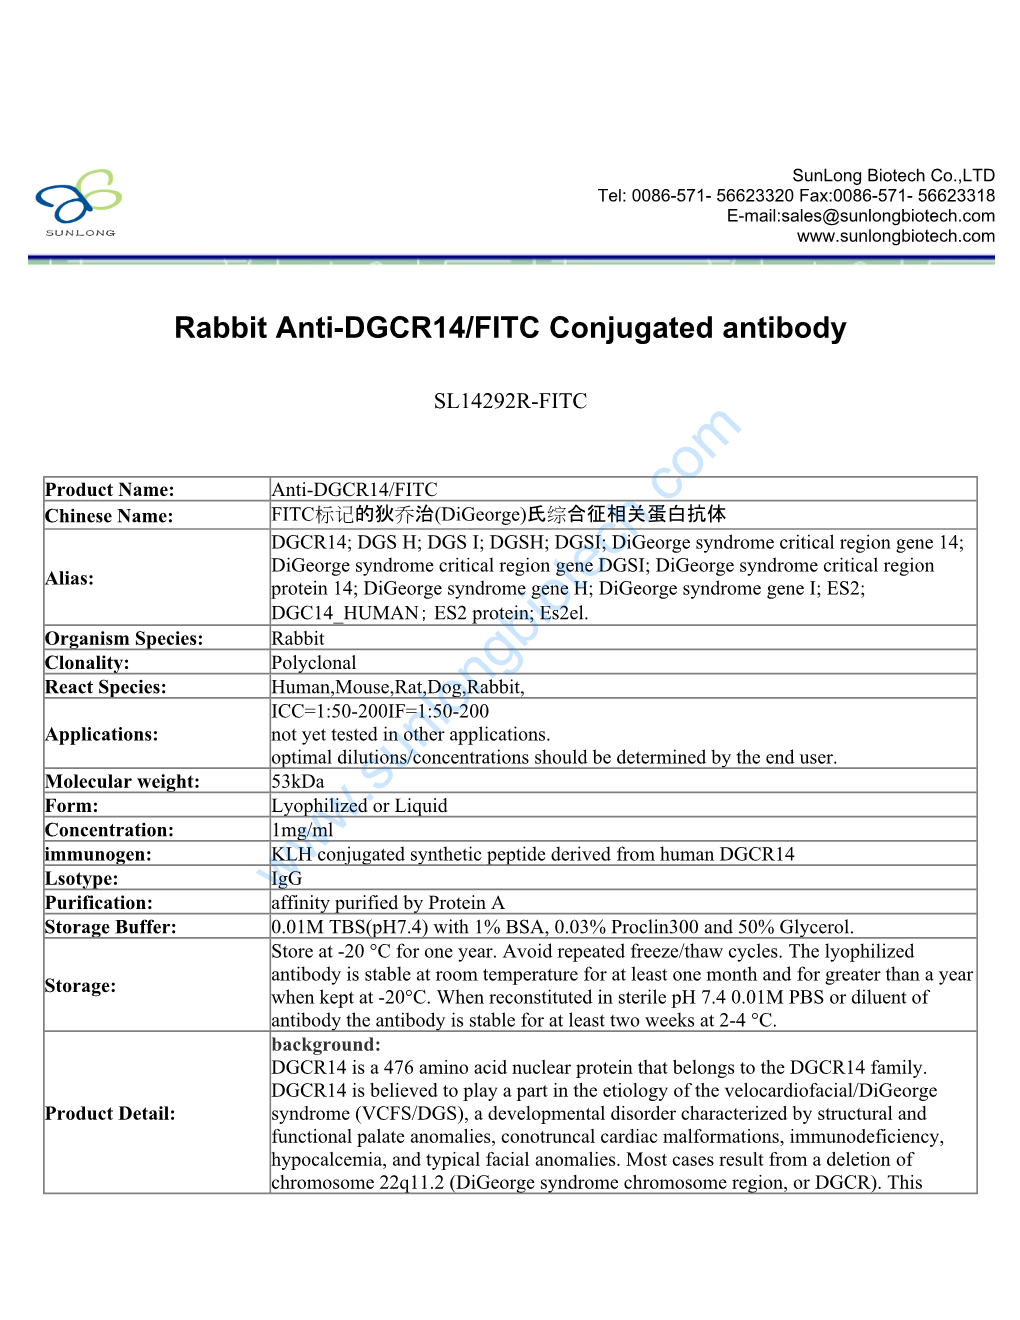 Rabbit Anti-DGCR14/FITC Conjugated Antibody-SL14292R